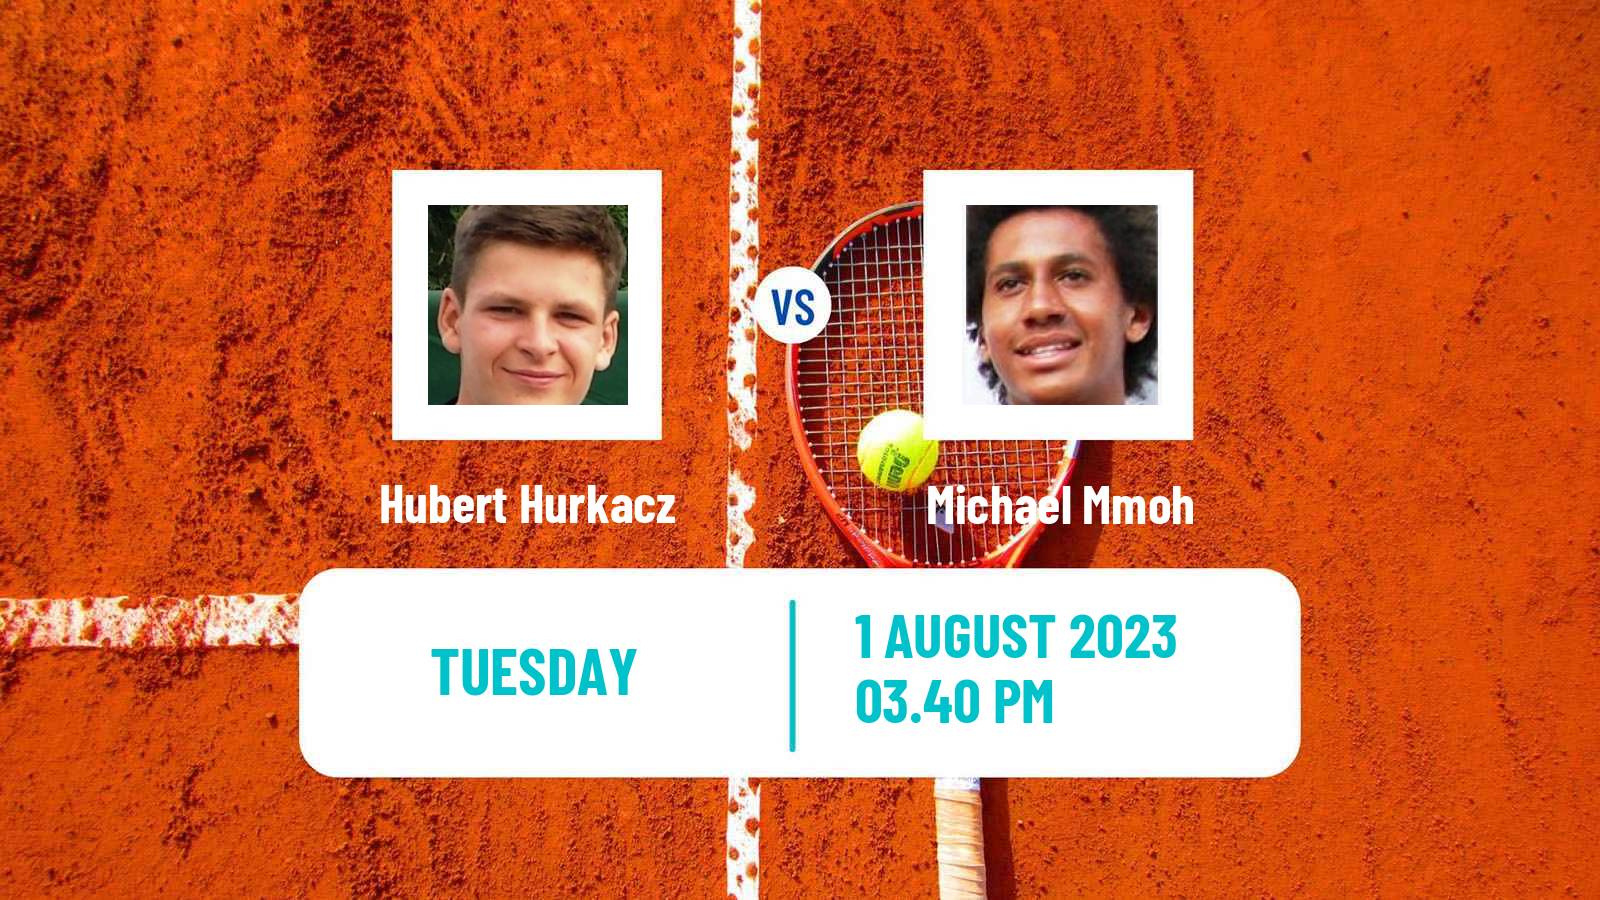 Tennis ATP Washington Hubert Hurkacz - Michael Mmoh